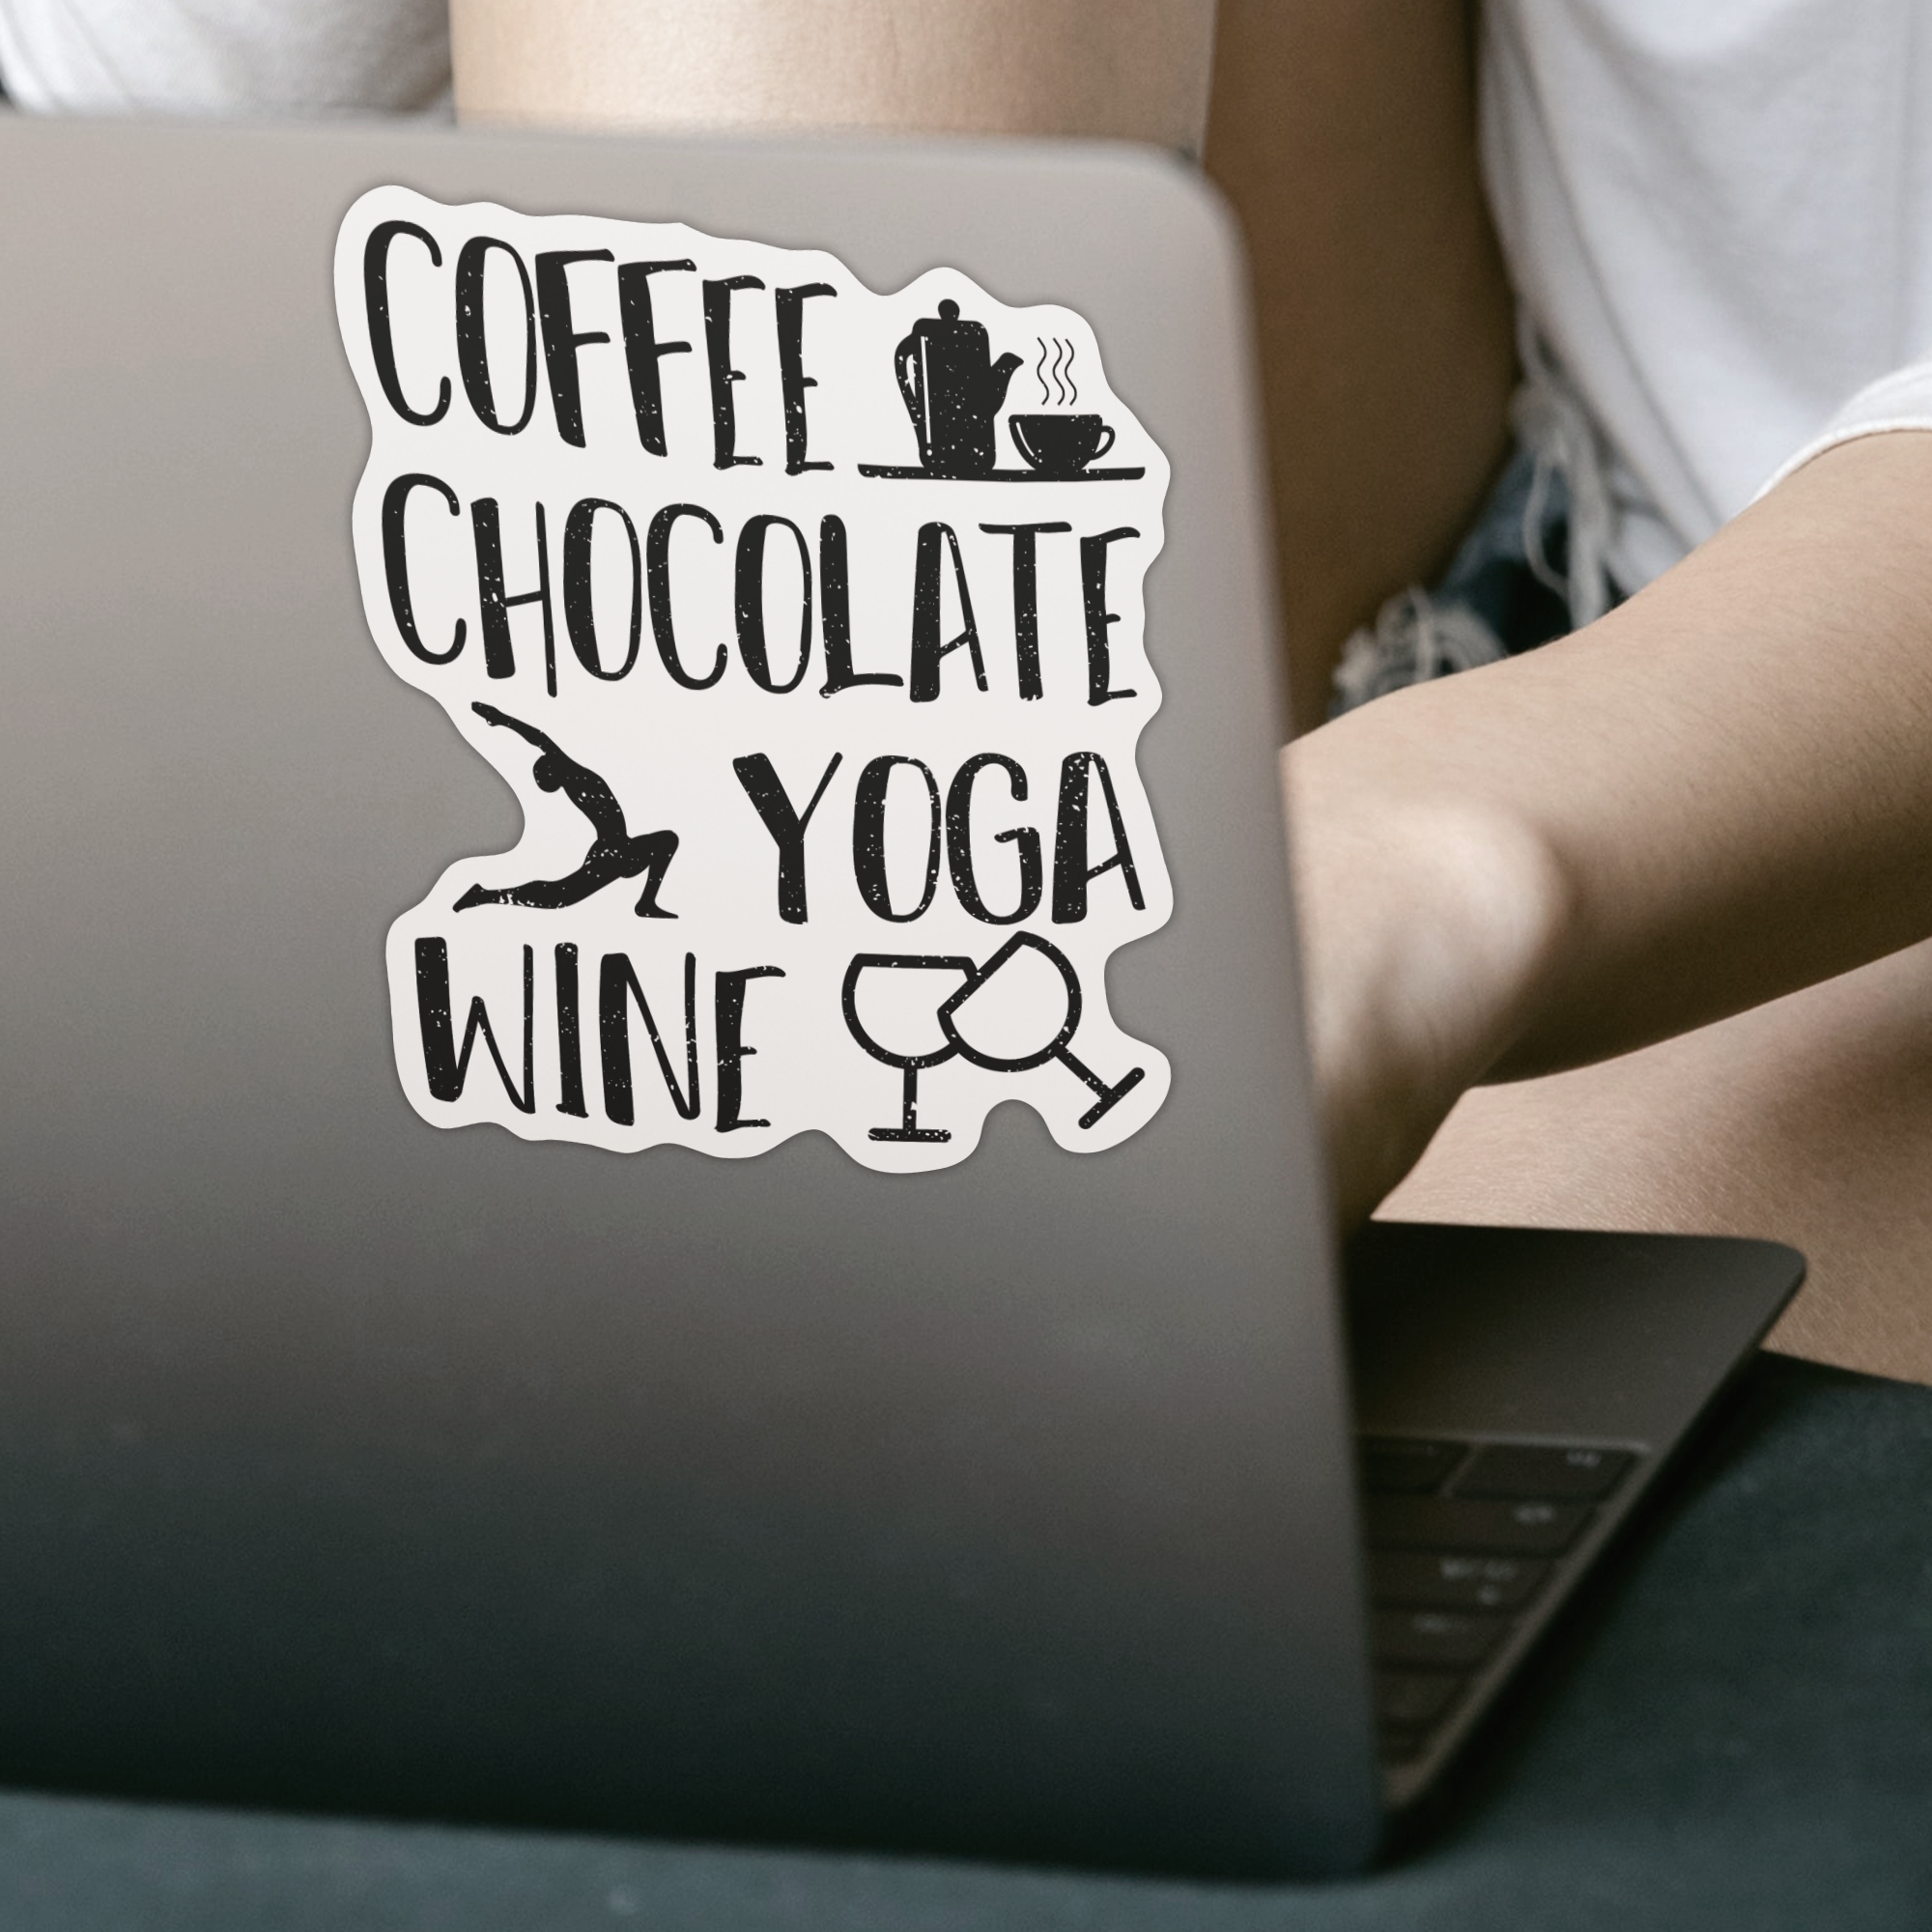 Coffee Chocolate Yoga Wine Sticker - DESIGNSBYJNK5.COM